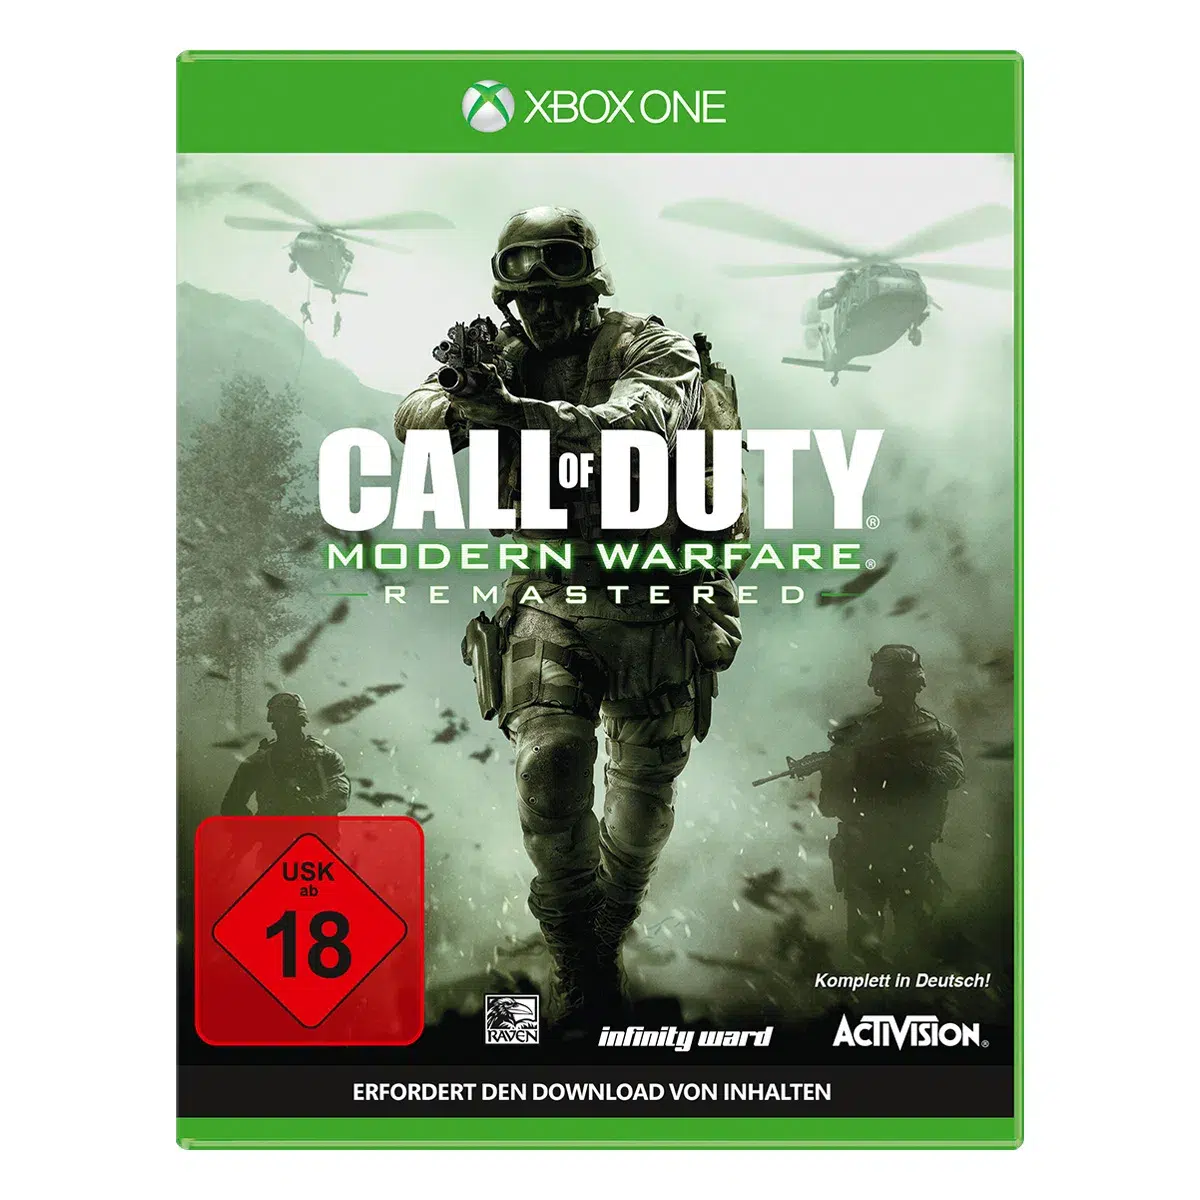 Call of Duty: Modern Warfare Remastered (XONE)